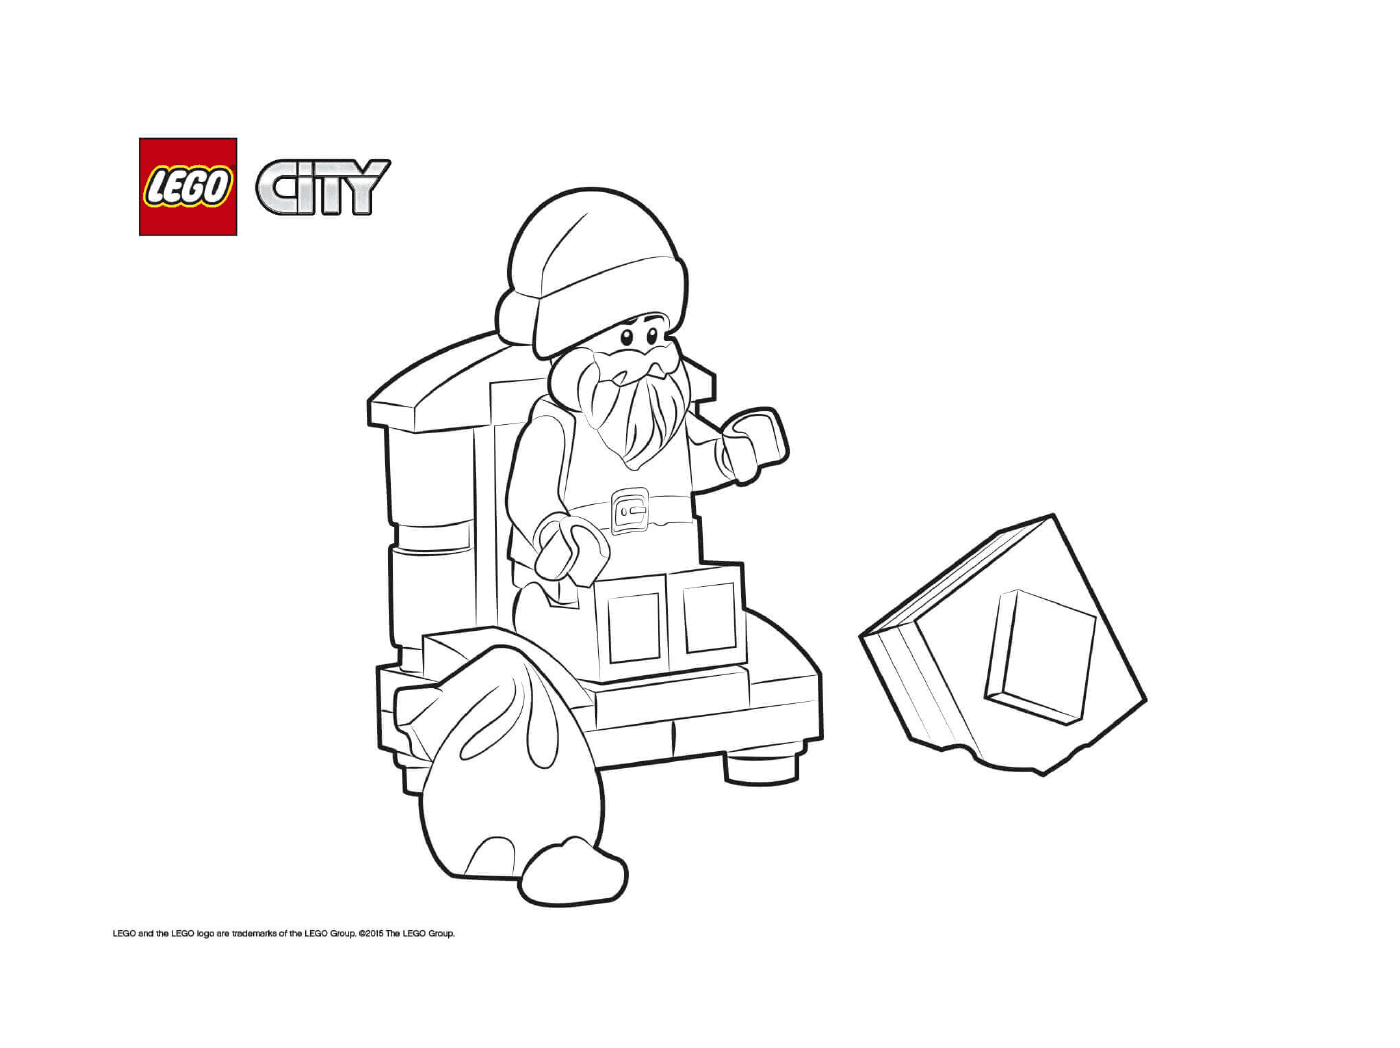  Santa Lego CityCity name (optional, probably does not need a translation) 